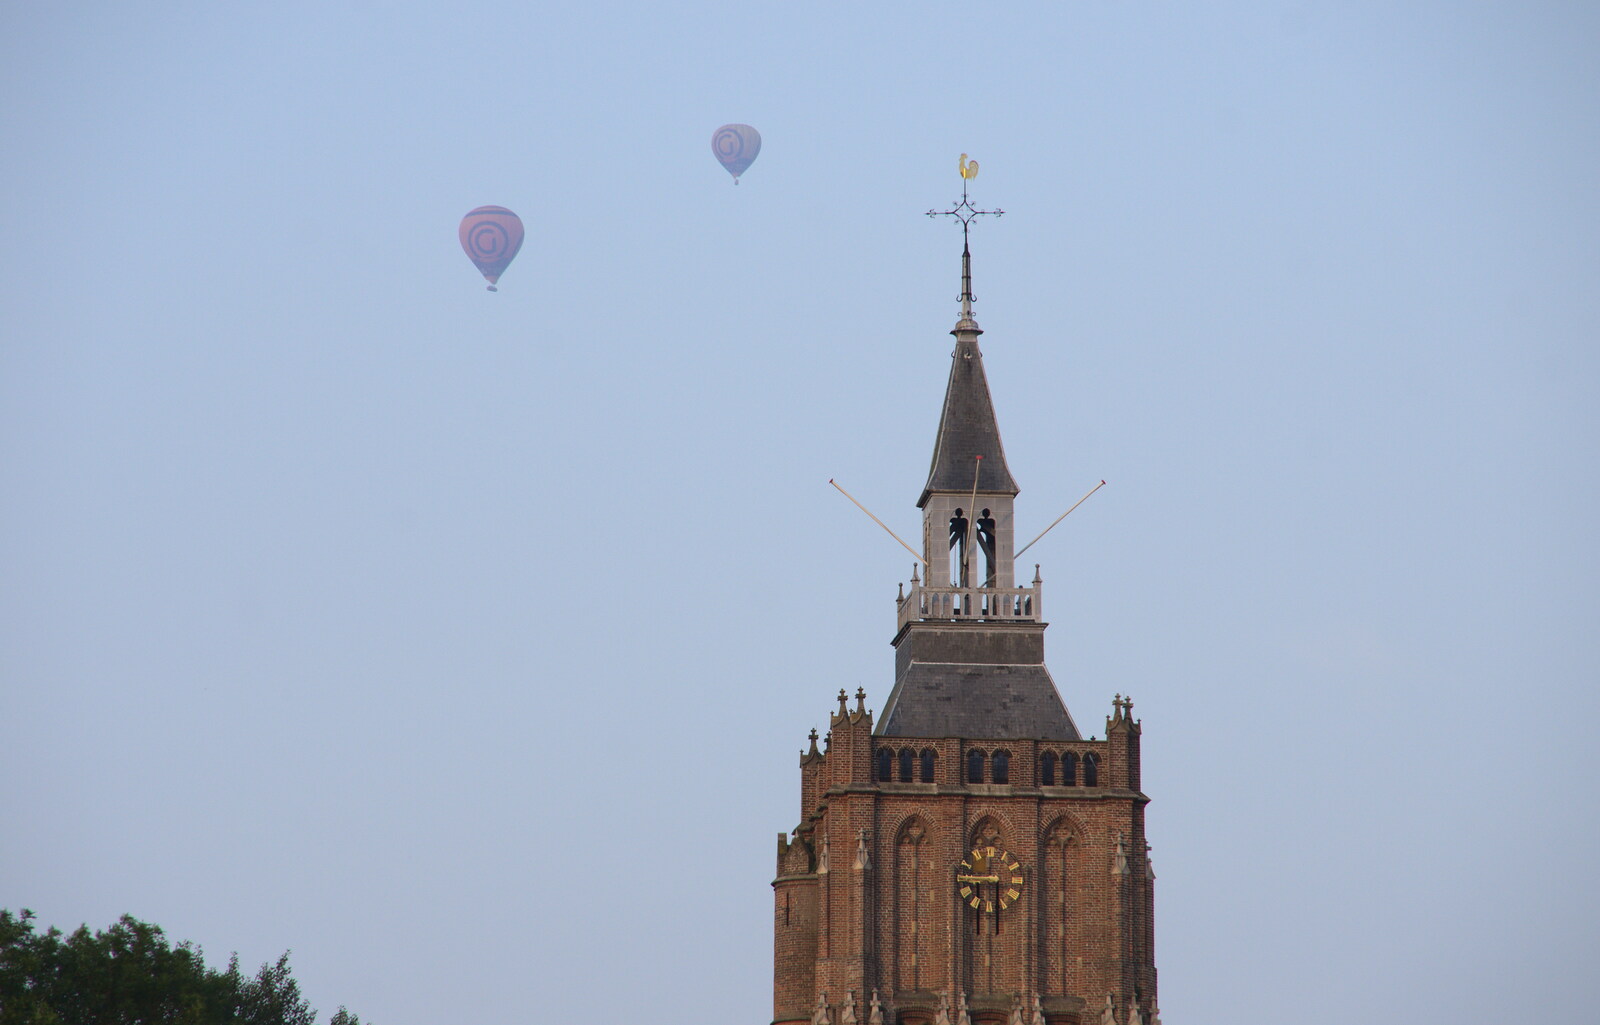 A couple of balloons float over the Hervormde Kerk from Martin's James Bond 50th Birthday, Asperen, Gelderland, Netherlands - 9th June 2018